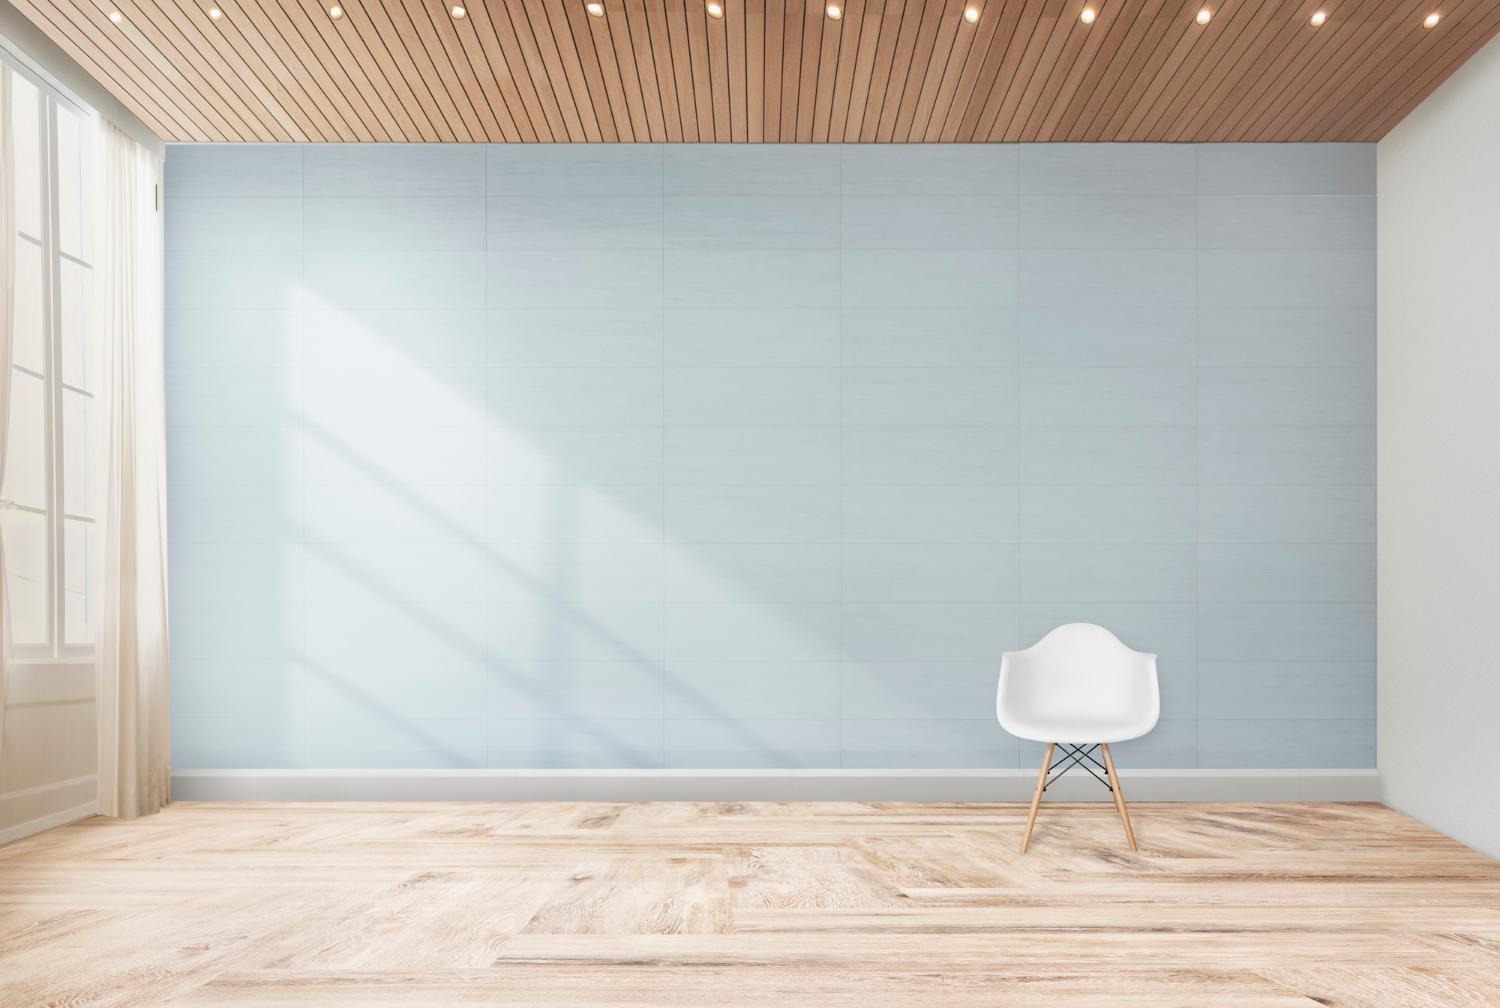 Untuk membuat ruangan yang hangat, plafon minimalis berbahan kayu bisa menjadi pilihan.